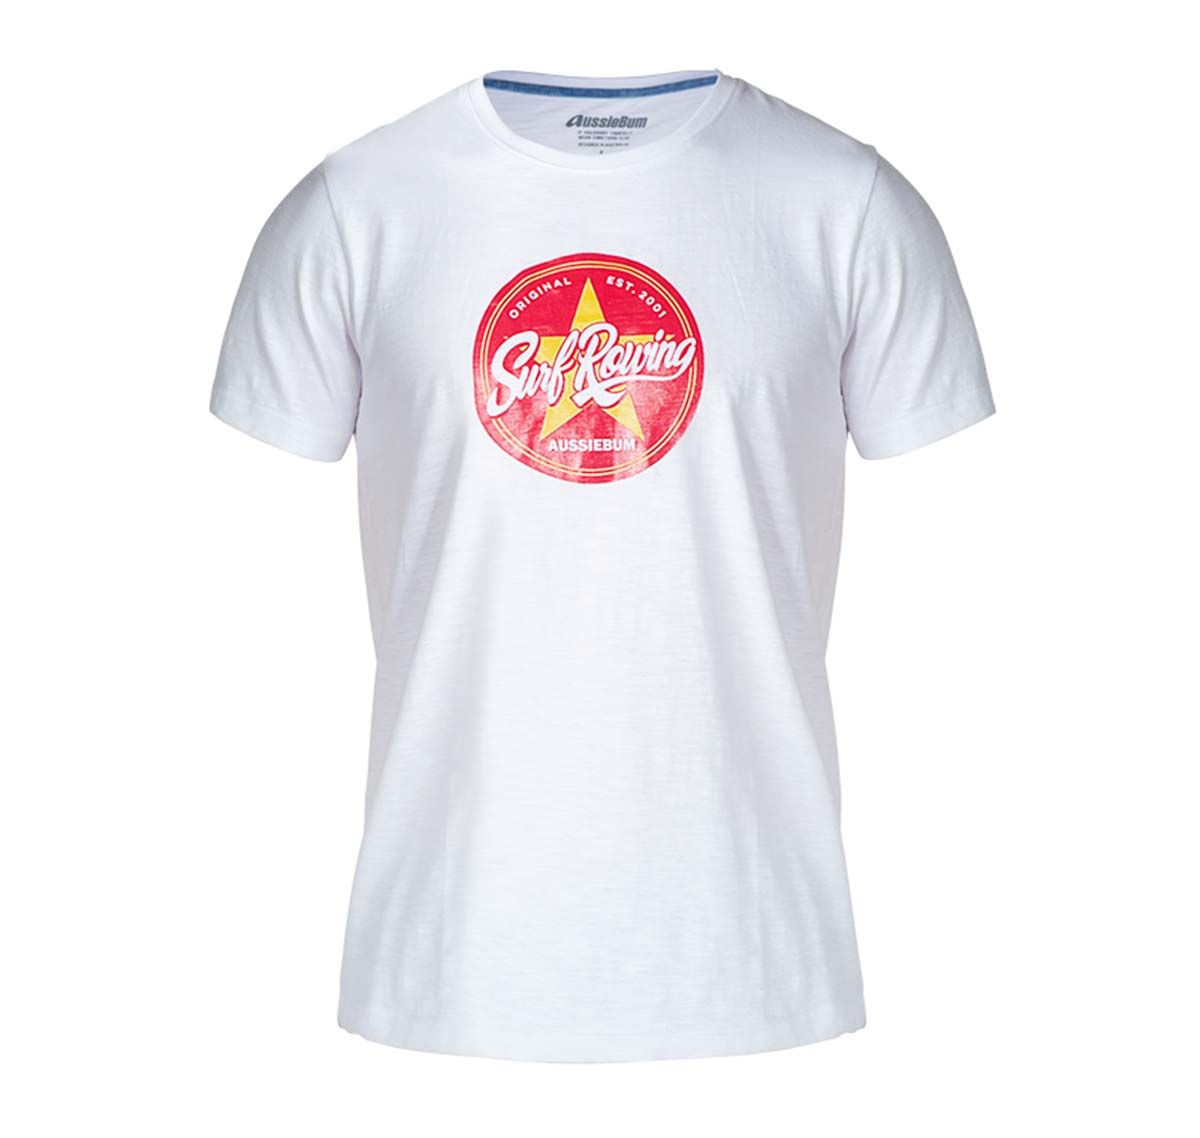 aussieBum T-Shirt DESIGNER TEE STAR RED, blanc